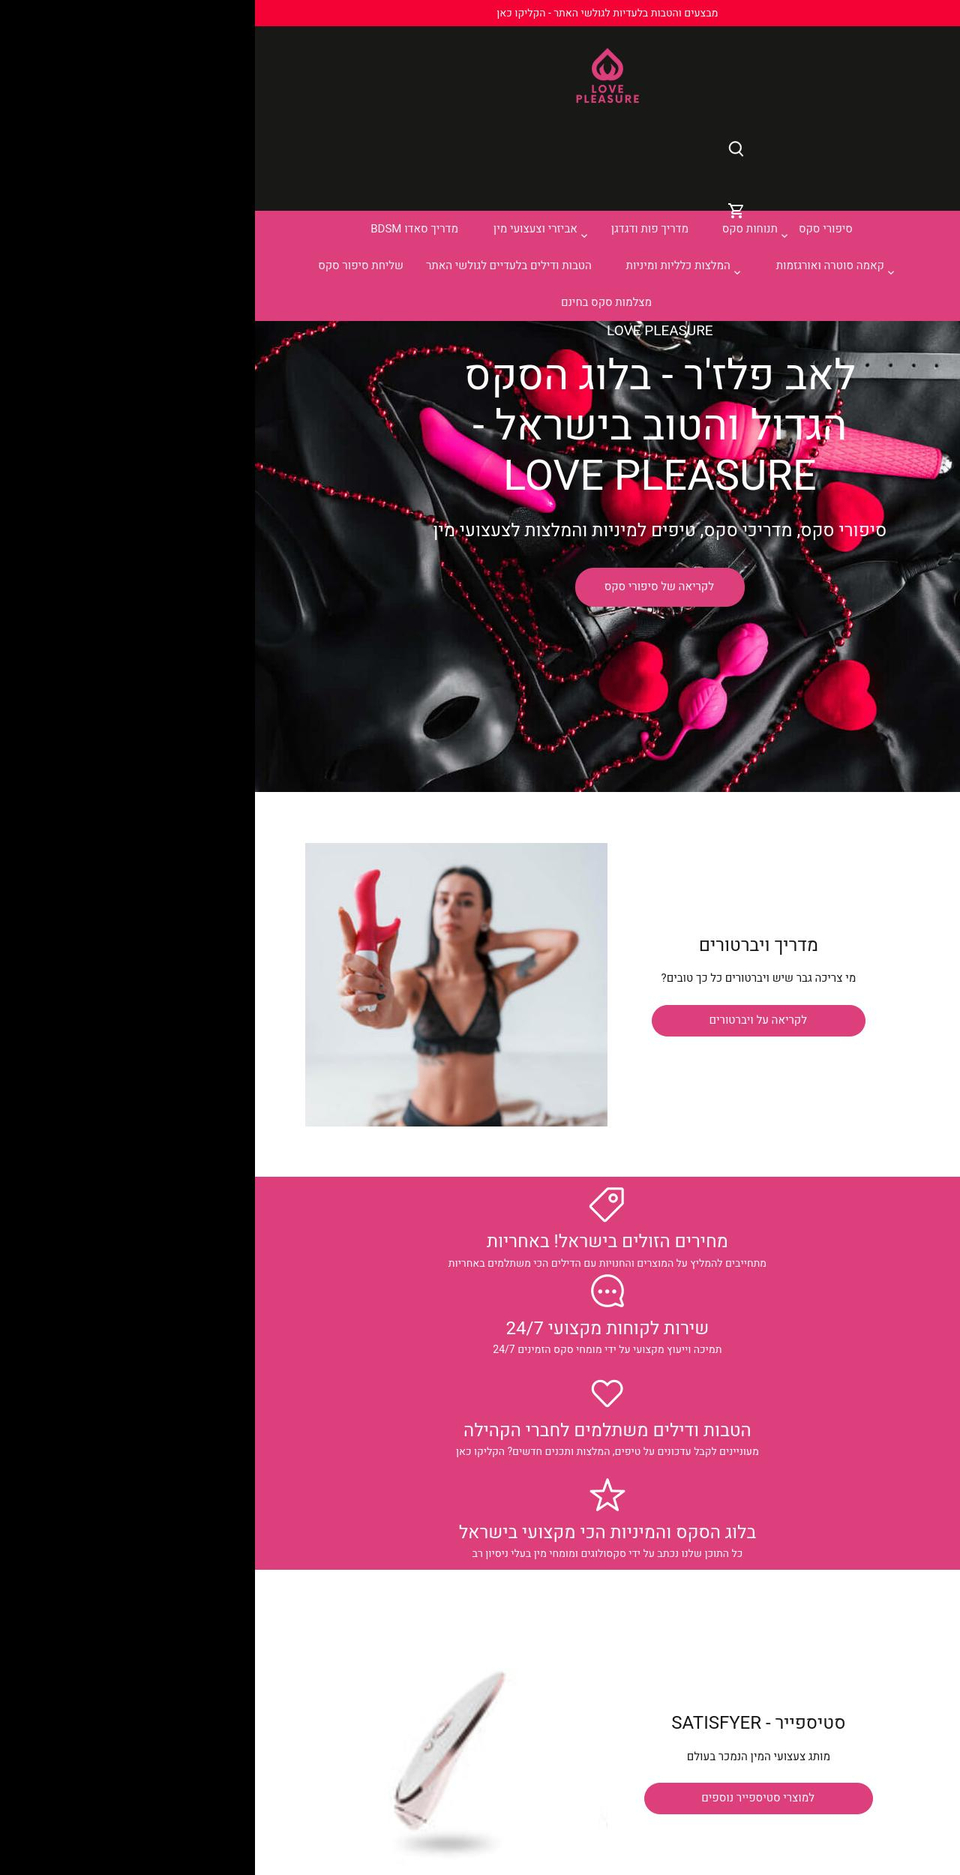 love-pleasure.com shopify website screenshot